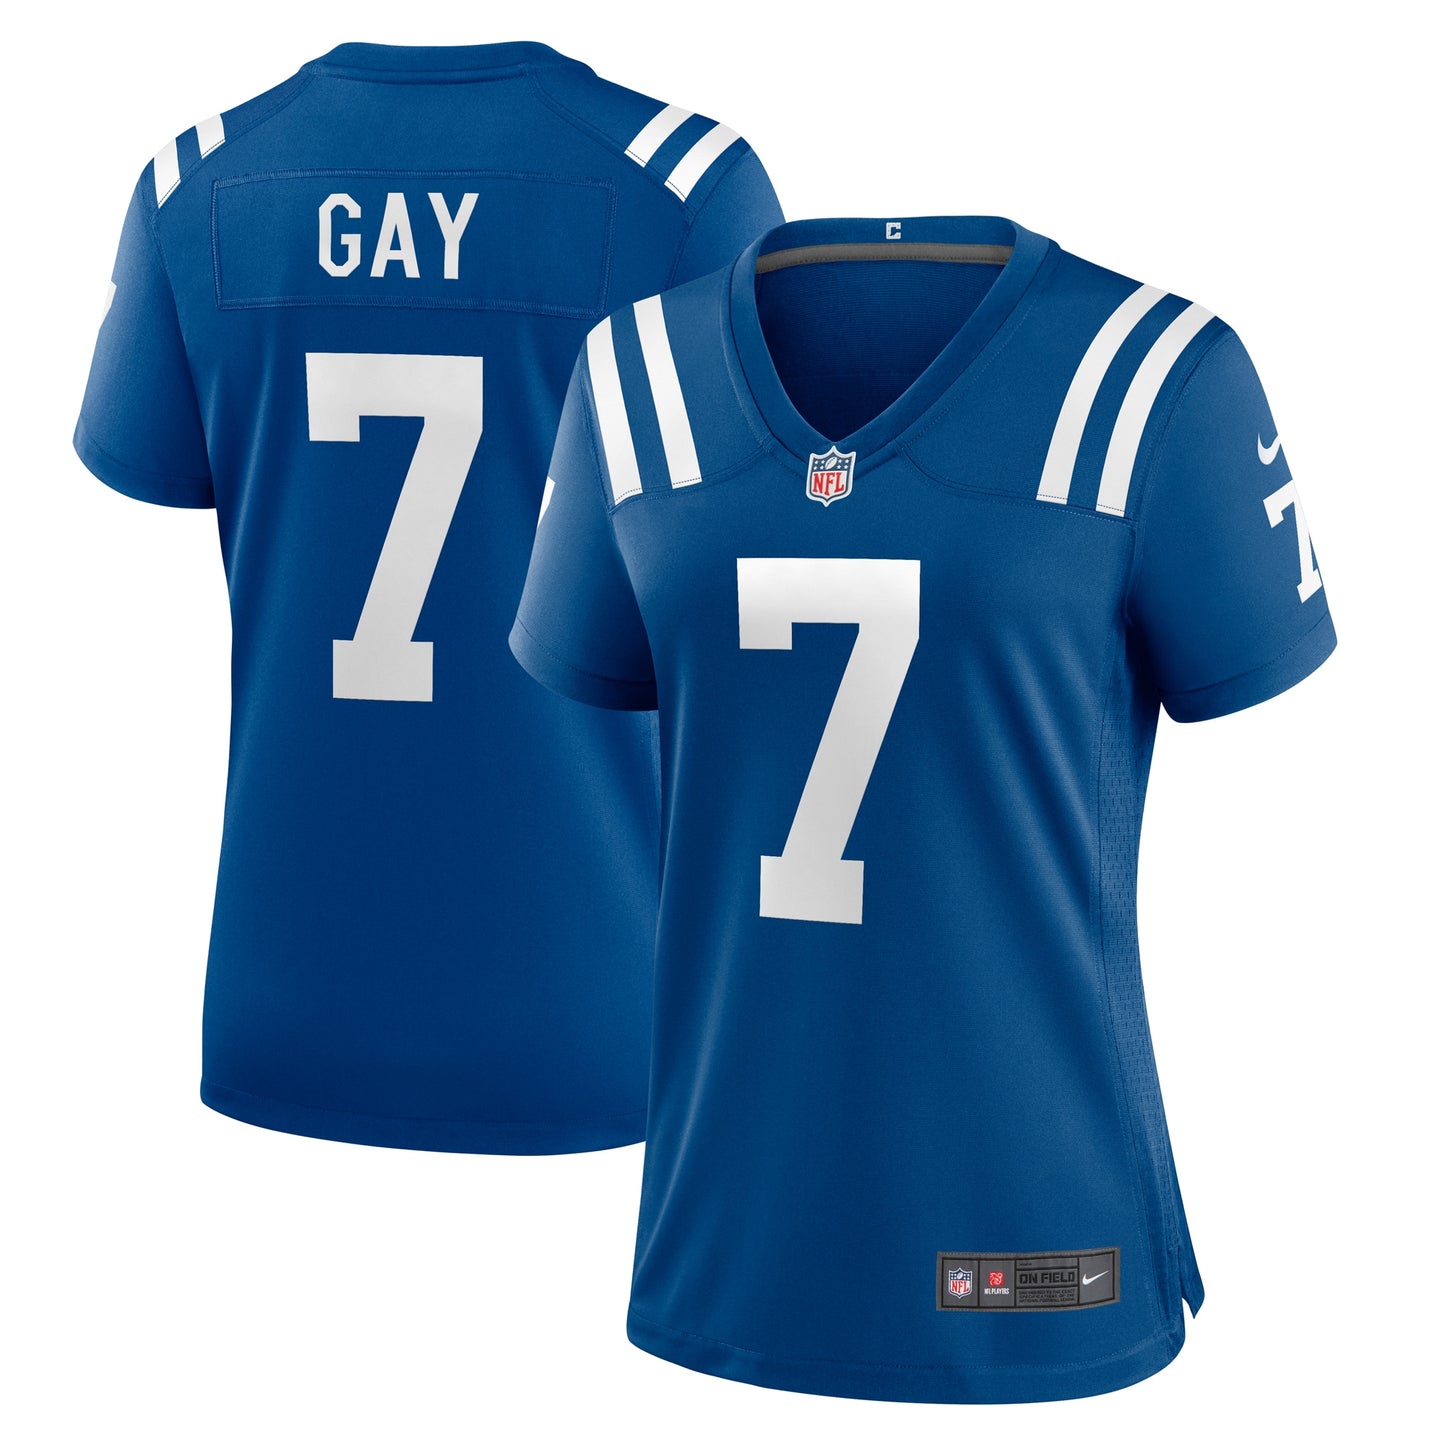 Matt Gay Indianapolis Colts Nike Women's Team Game Jersey - Royal